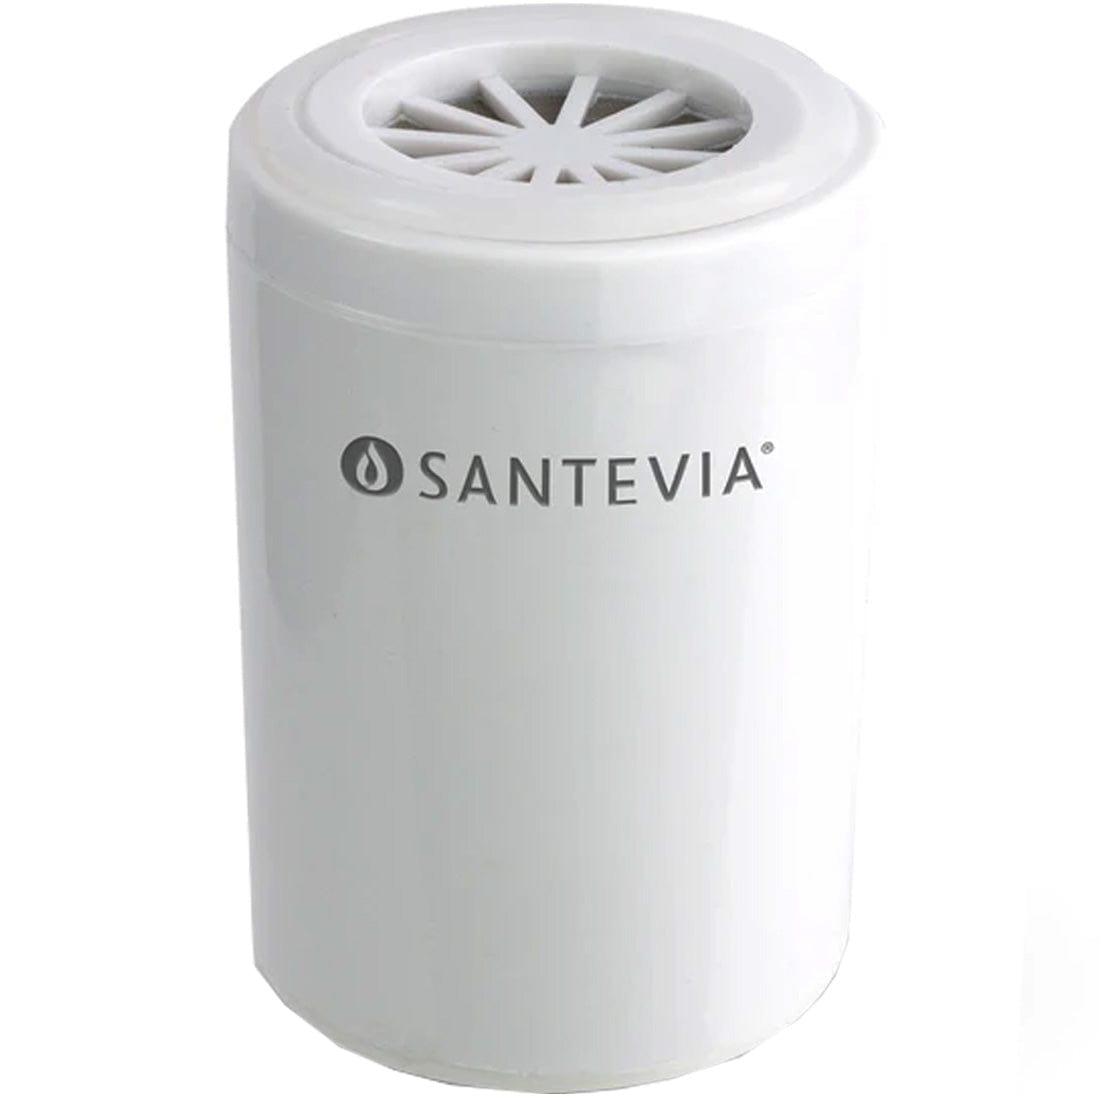 Santevia Shower Filter Replacement Cartridge